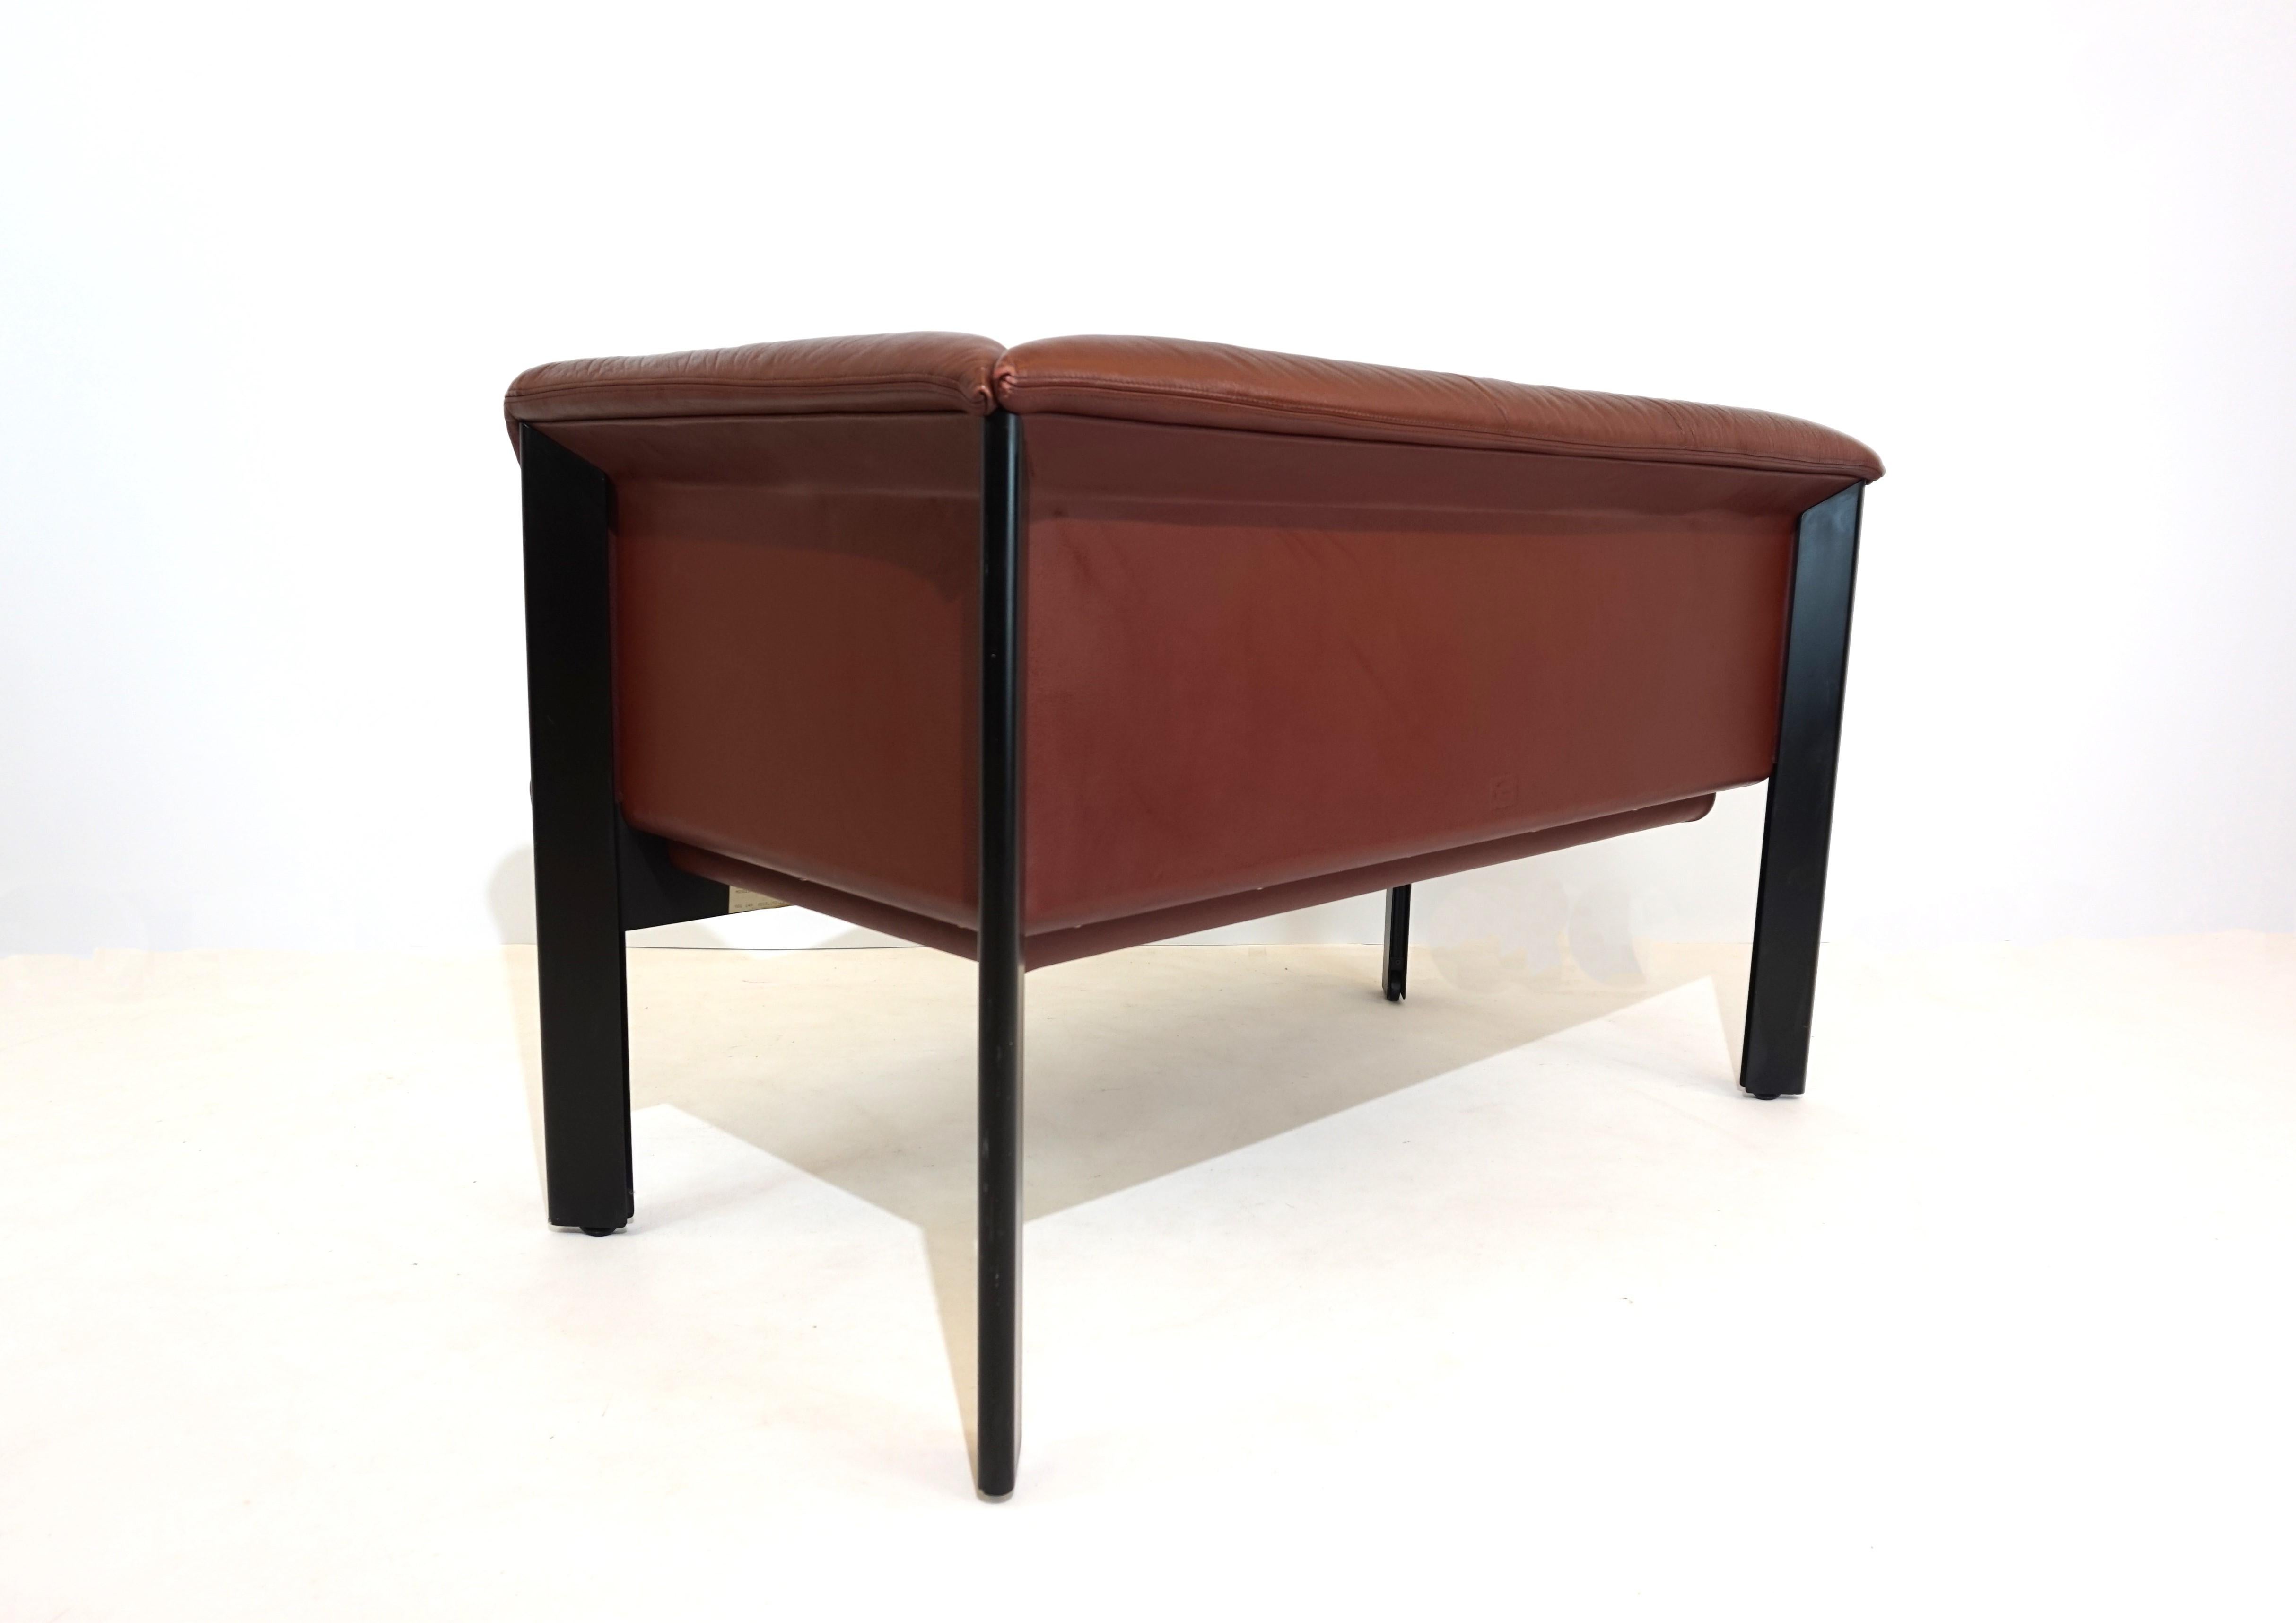 Poltrona Frau Interlude leather bench 2 seater by Marco Zanuso 1